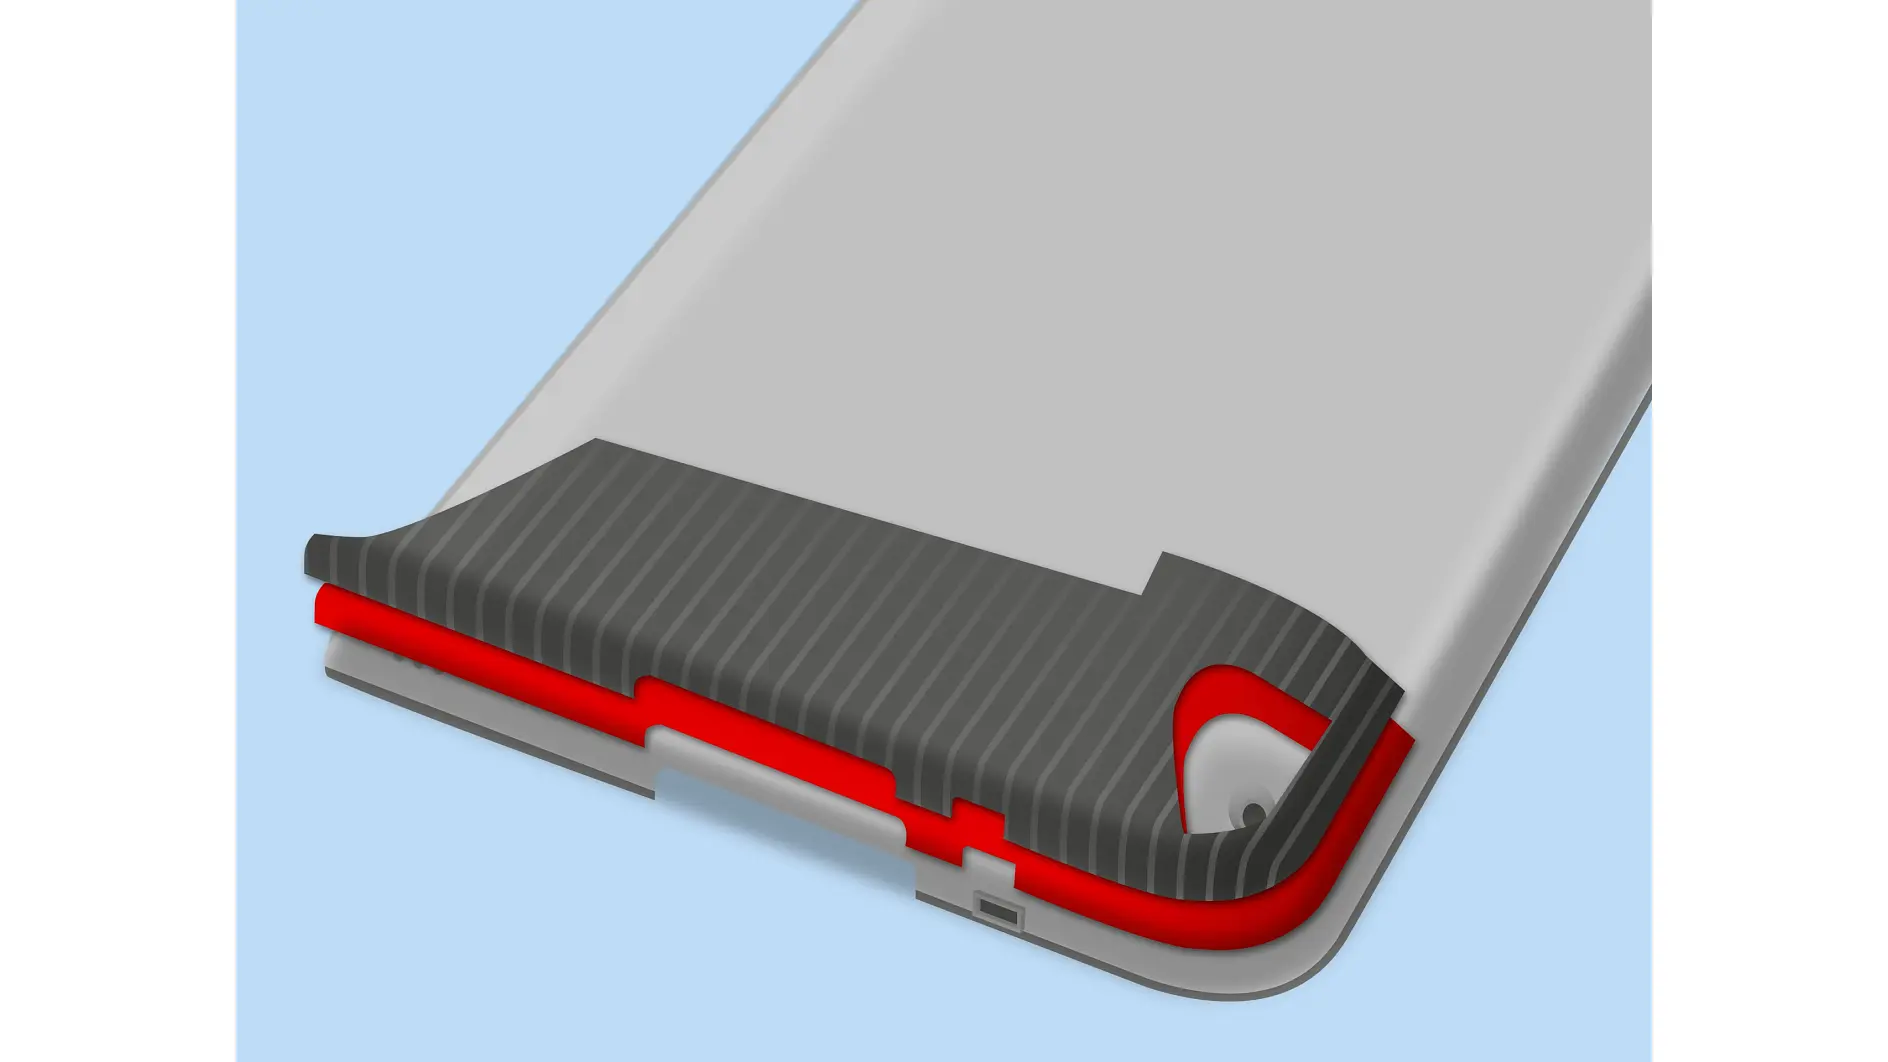 tesa-electronics-smartphone-bended-fpc-mounting-illustration